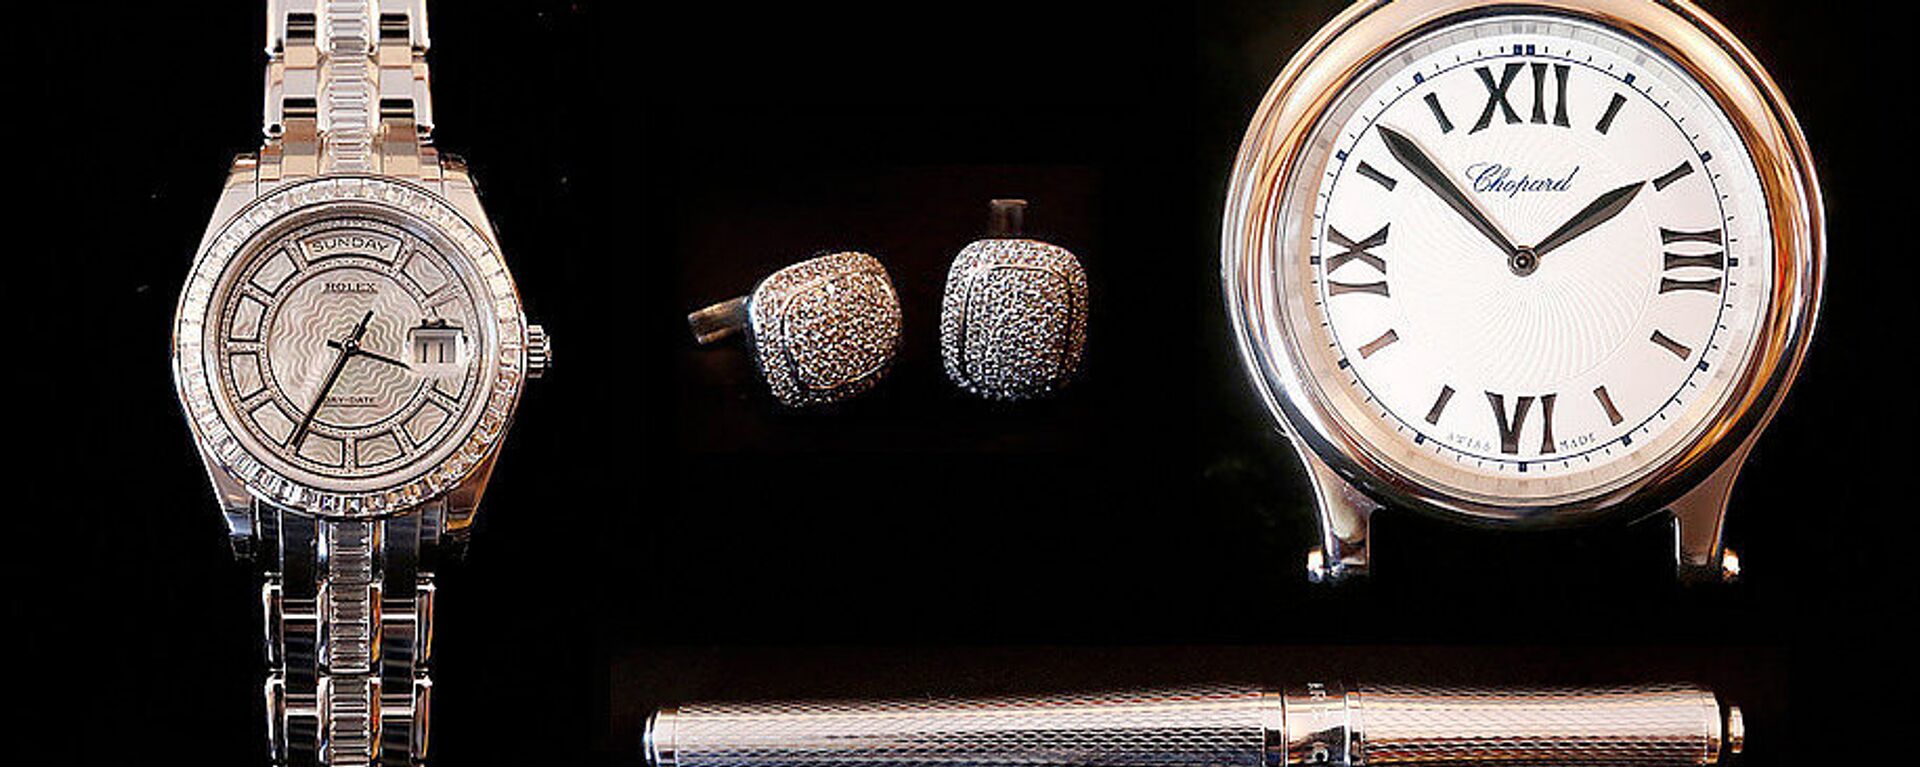 Set de joyas personales de Oro Blanco, Platino y Acero - Sputnik Mundo, 1920, 27.04.2021